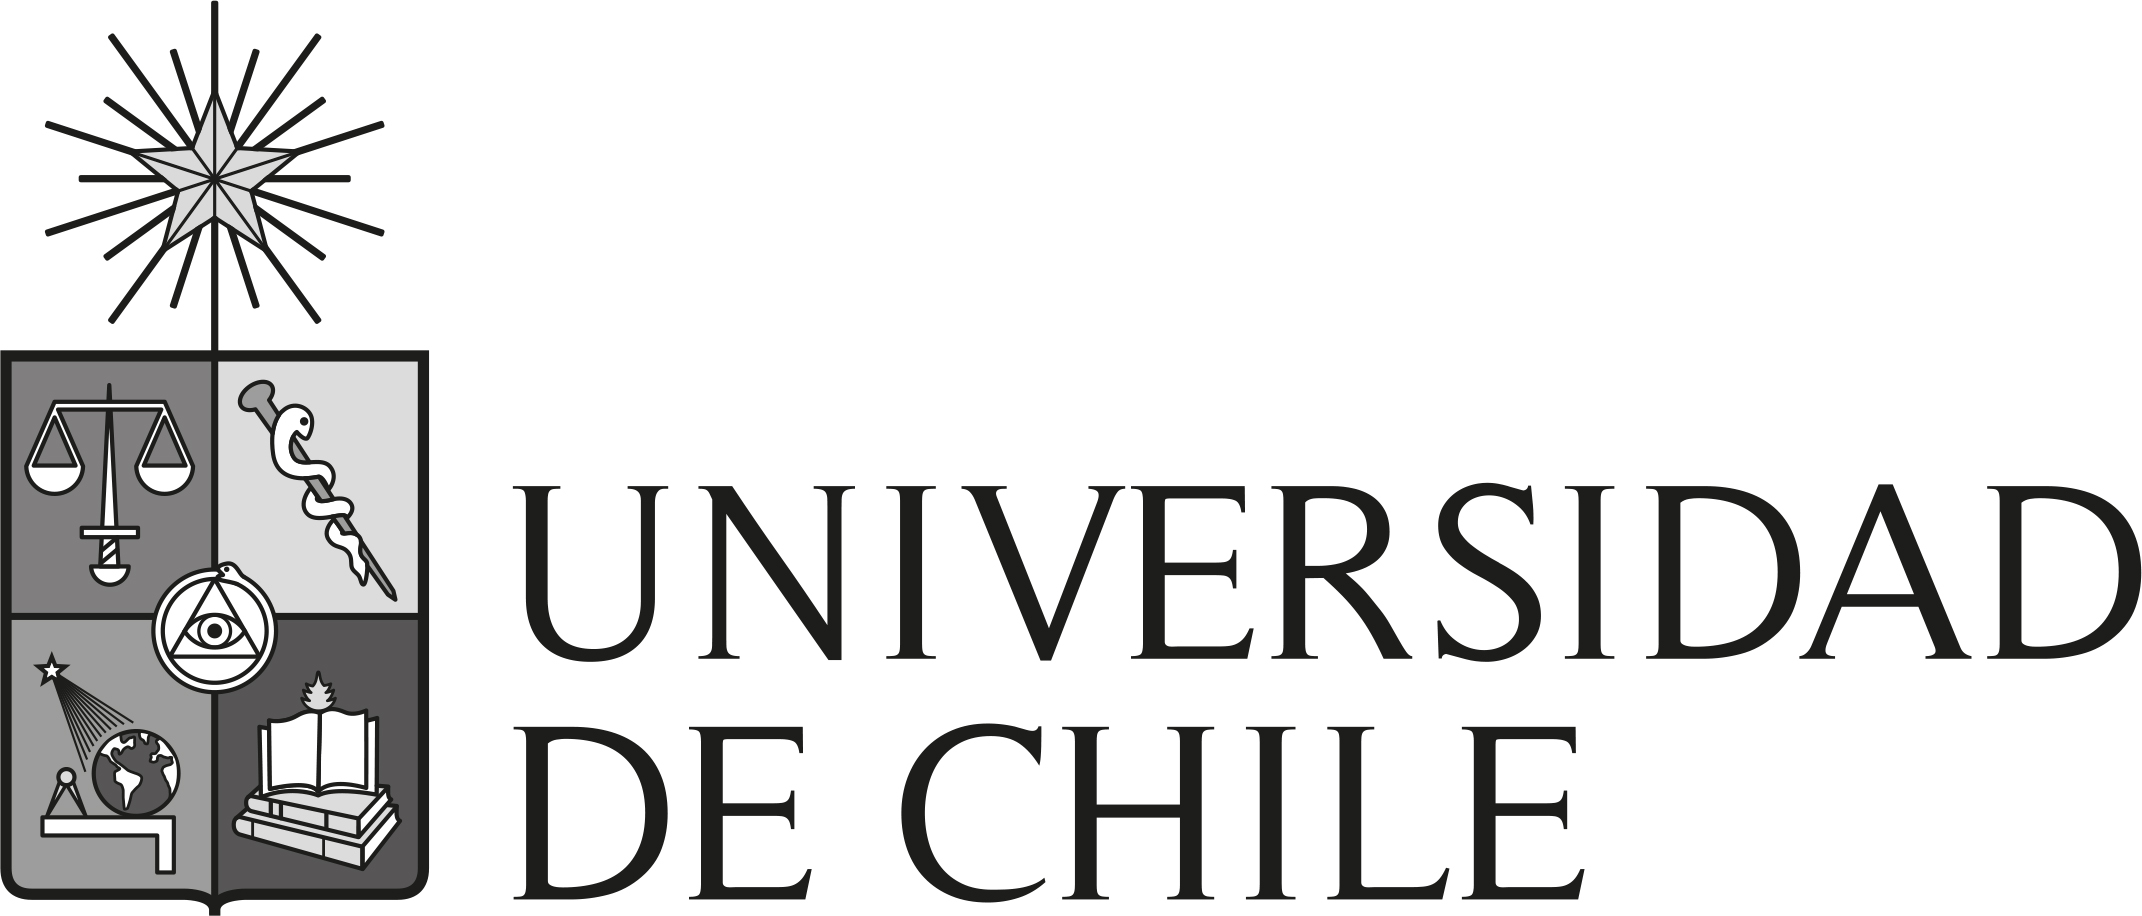 Escudo Universidad de Chile horizontal escala de grises